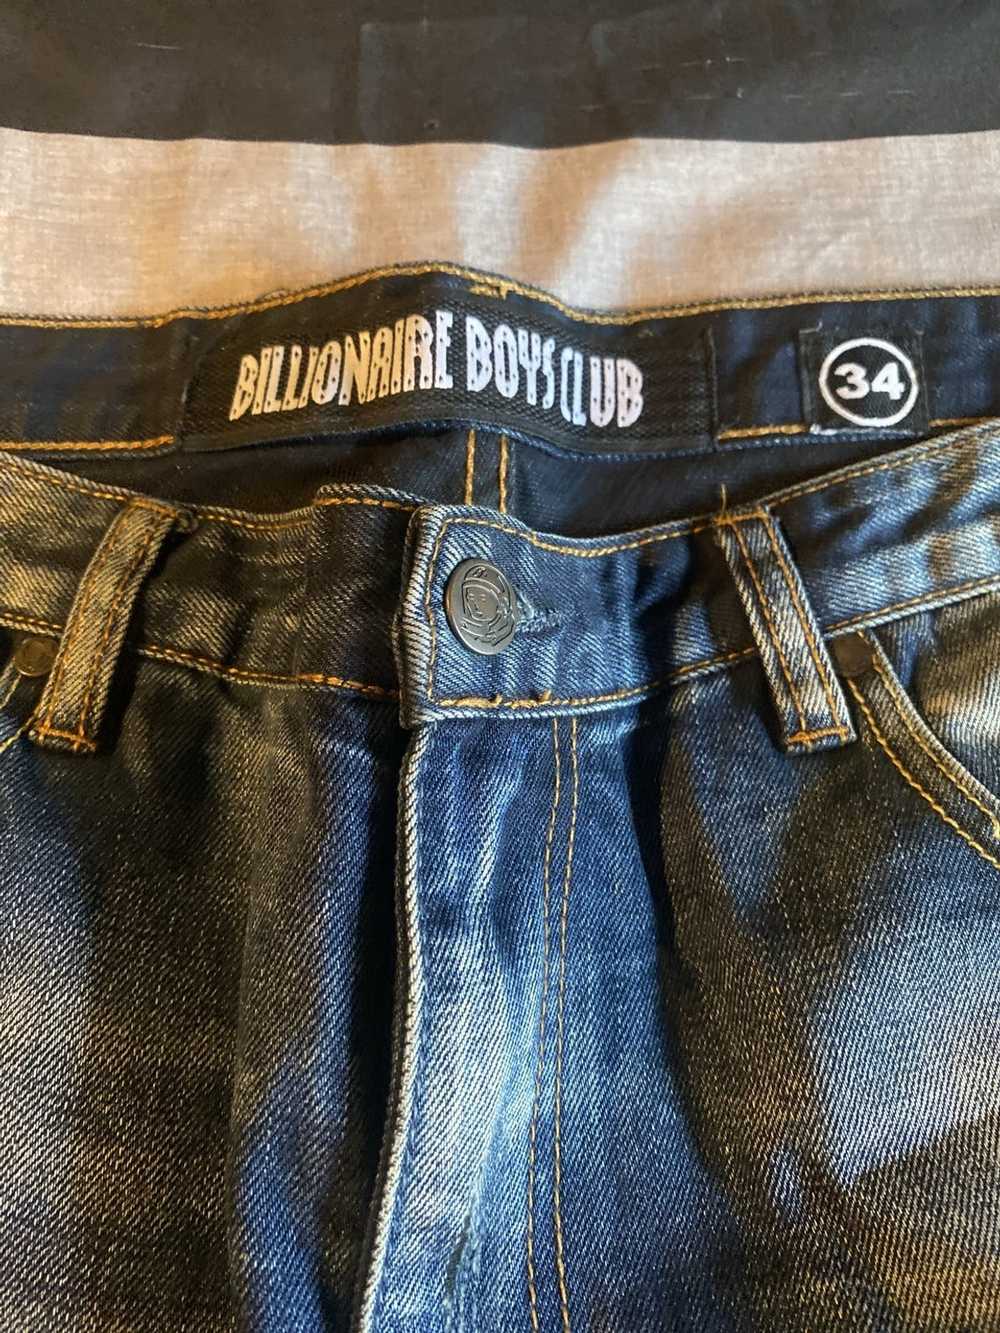 Billionaire Boys Club BBC denim jeans - image 2